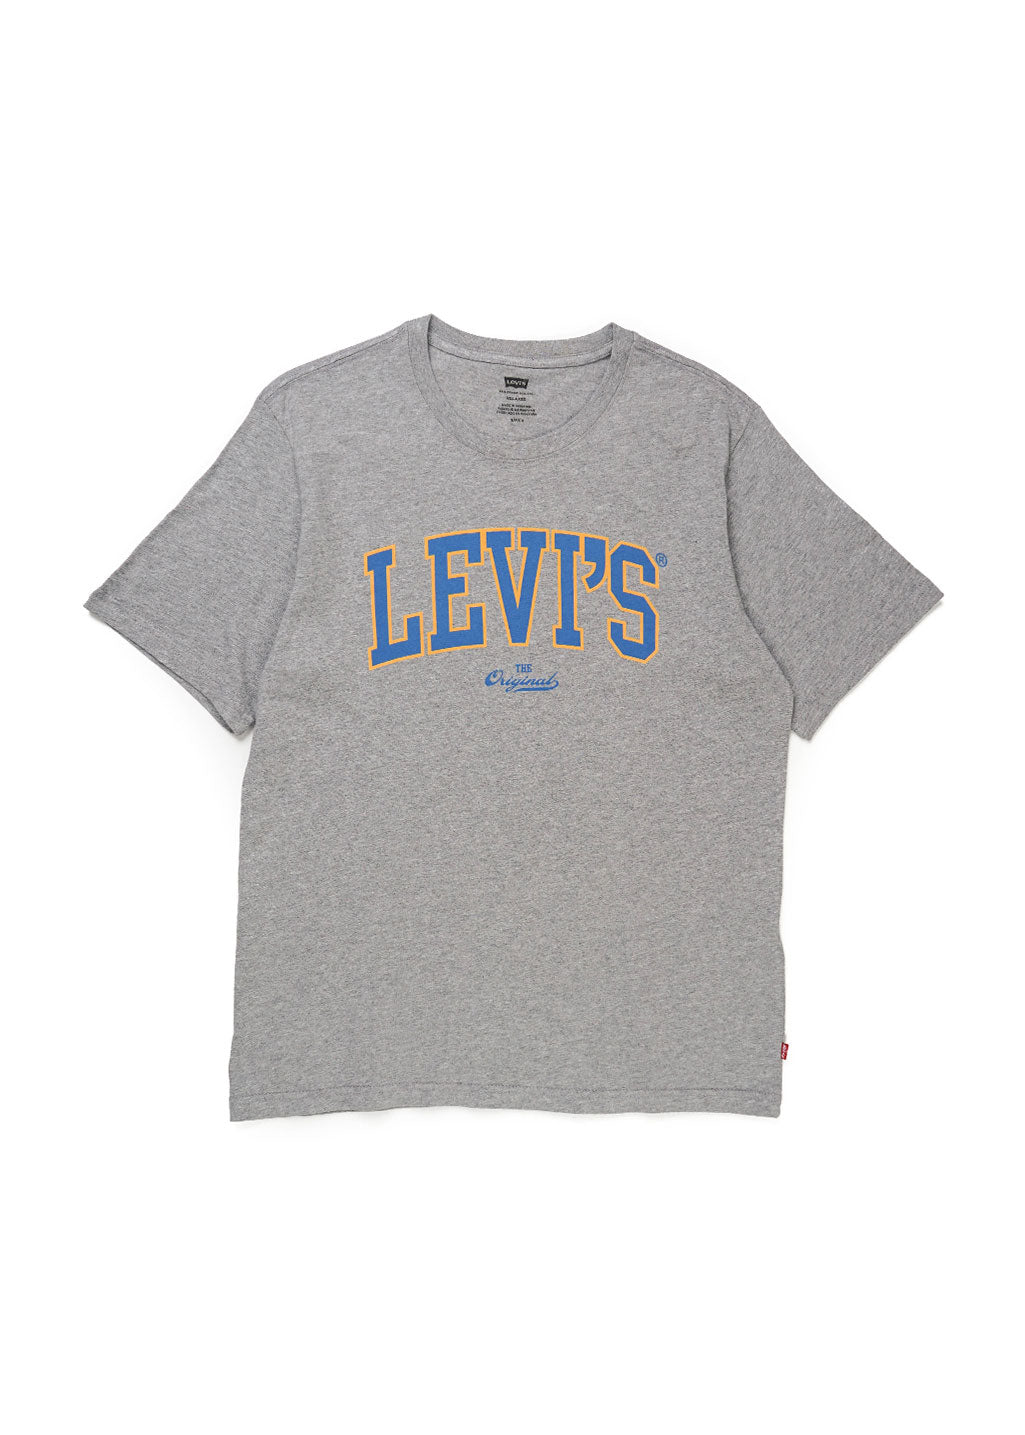 Levi's - S/S Relaxed Fit Tee - Varsity MHG - Hardpressed Print Studio